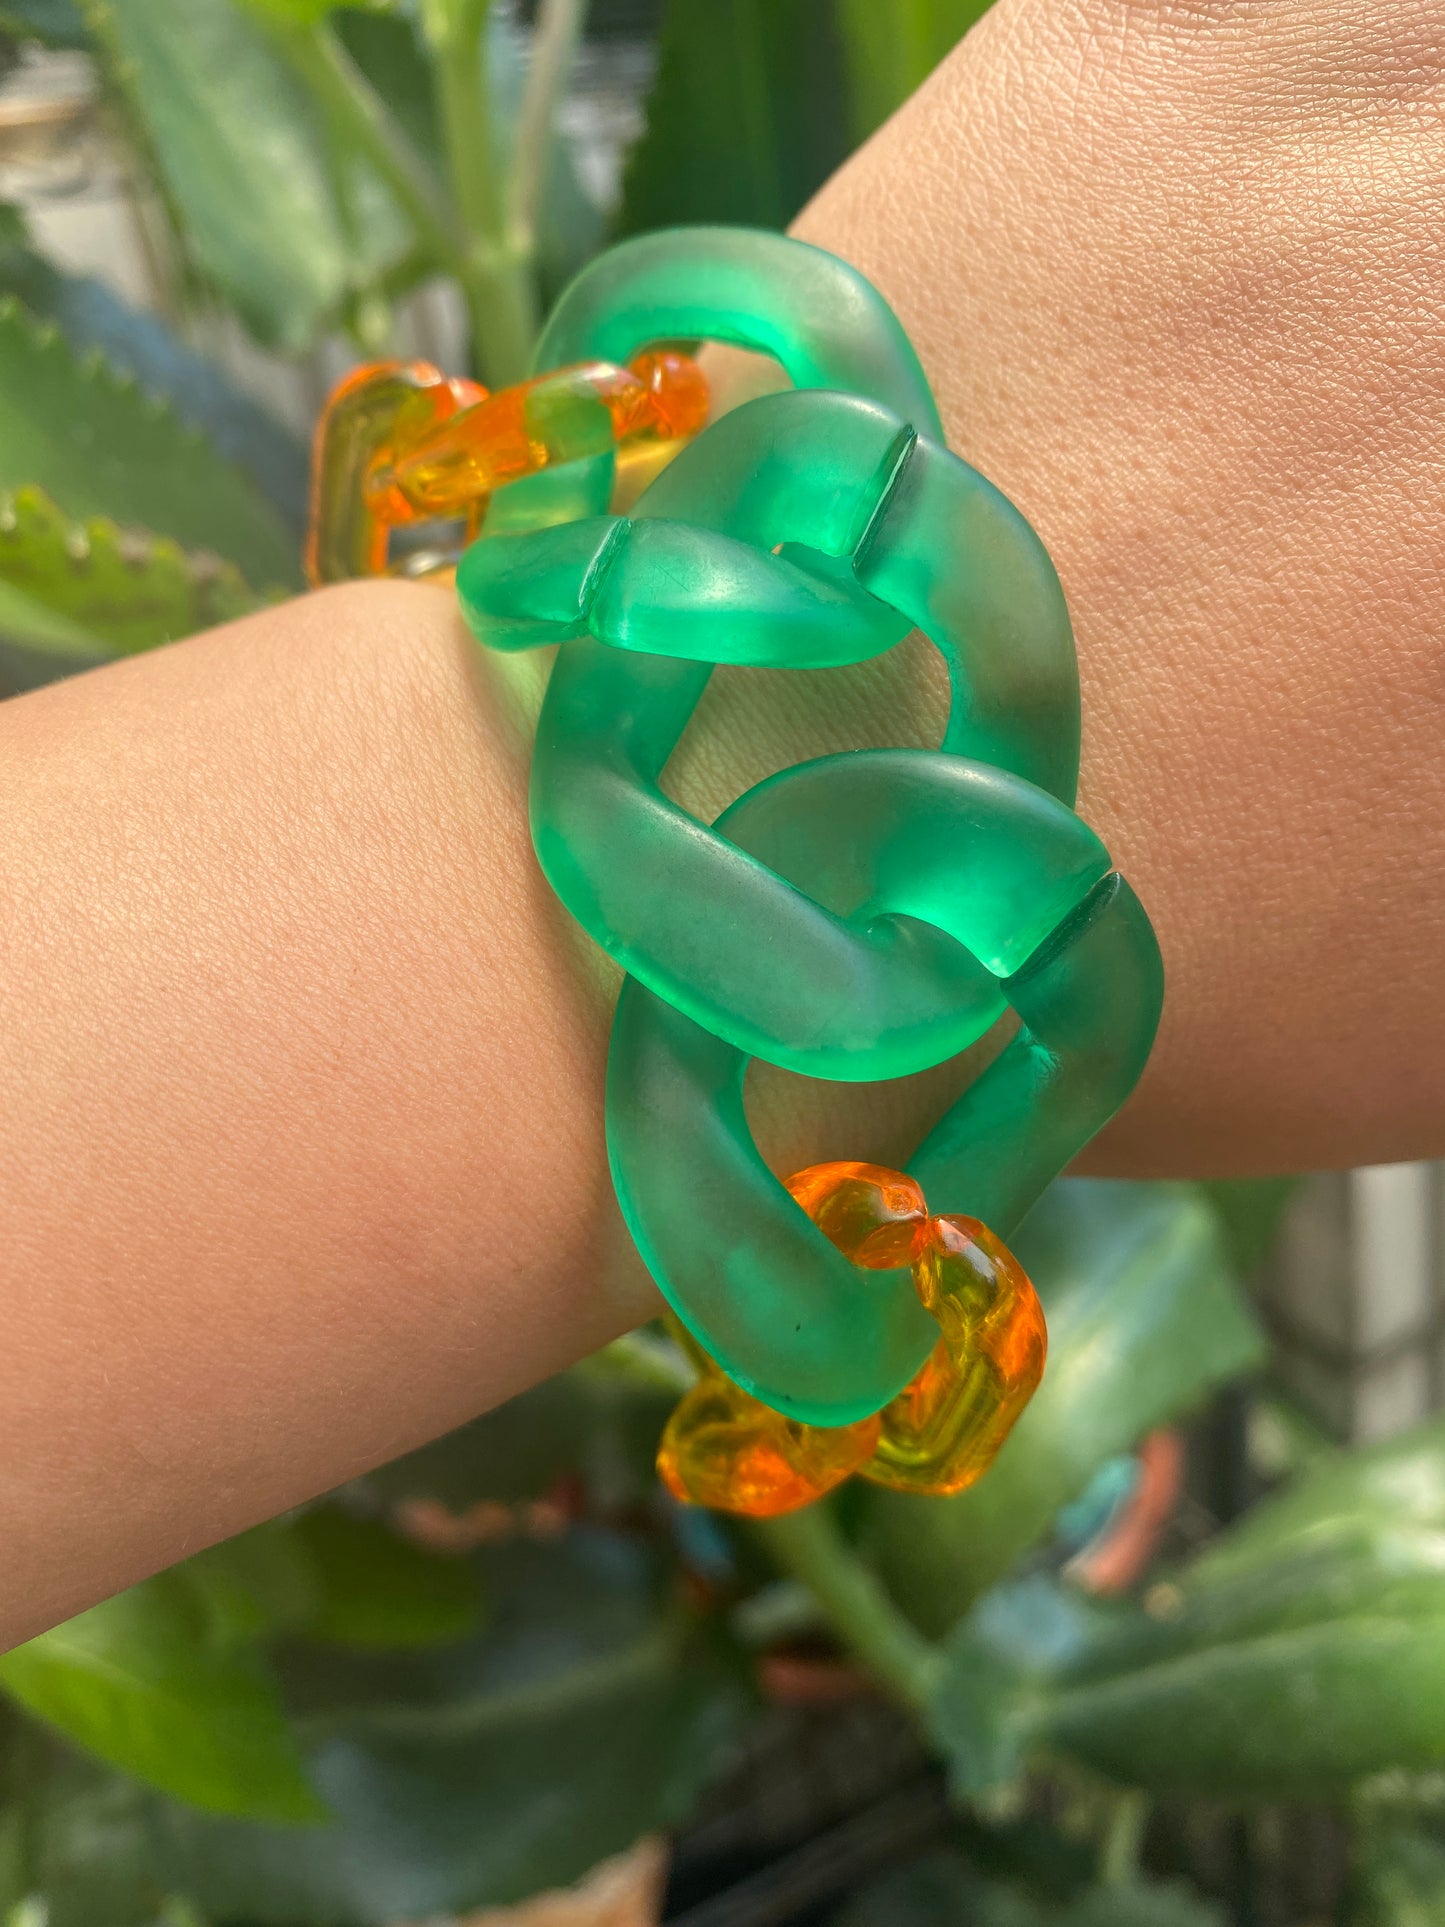 INFINITE COLORS Bracelet - Jade Green & Marigold | cukimber designs